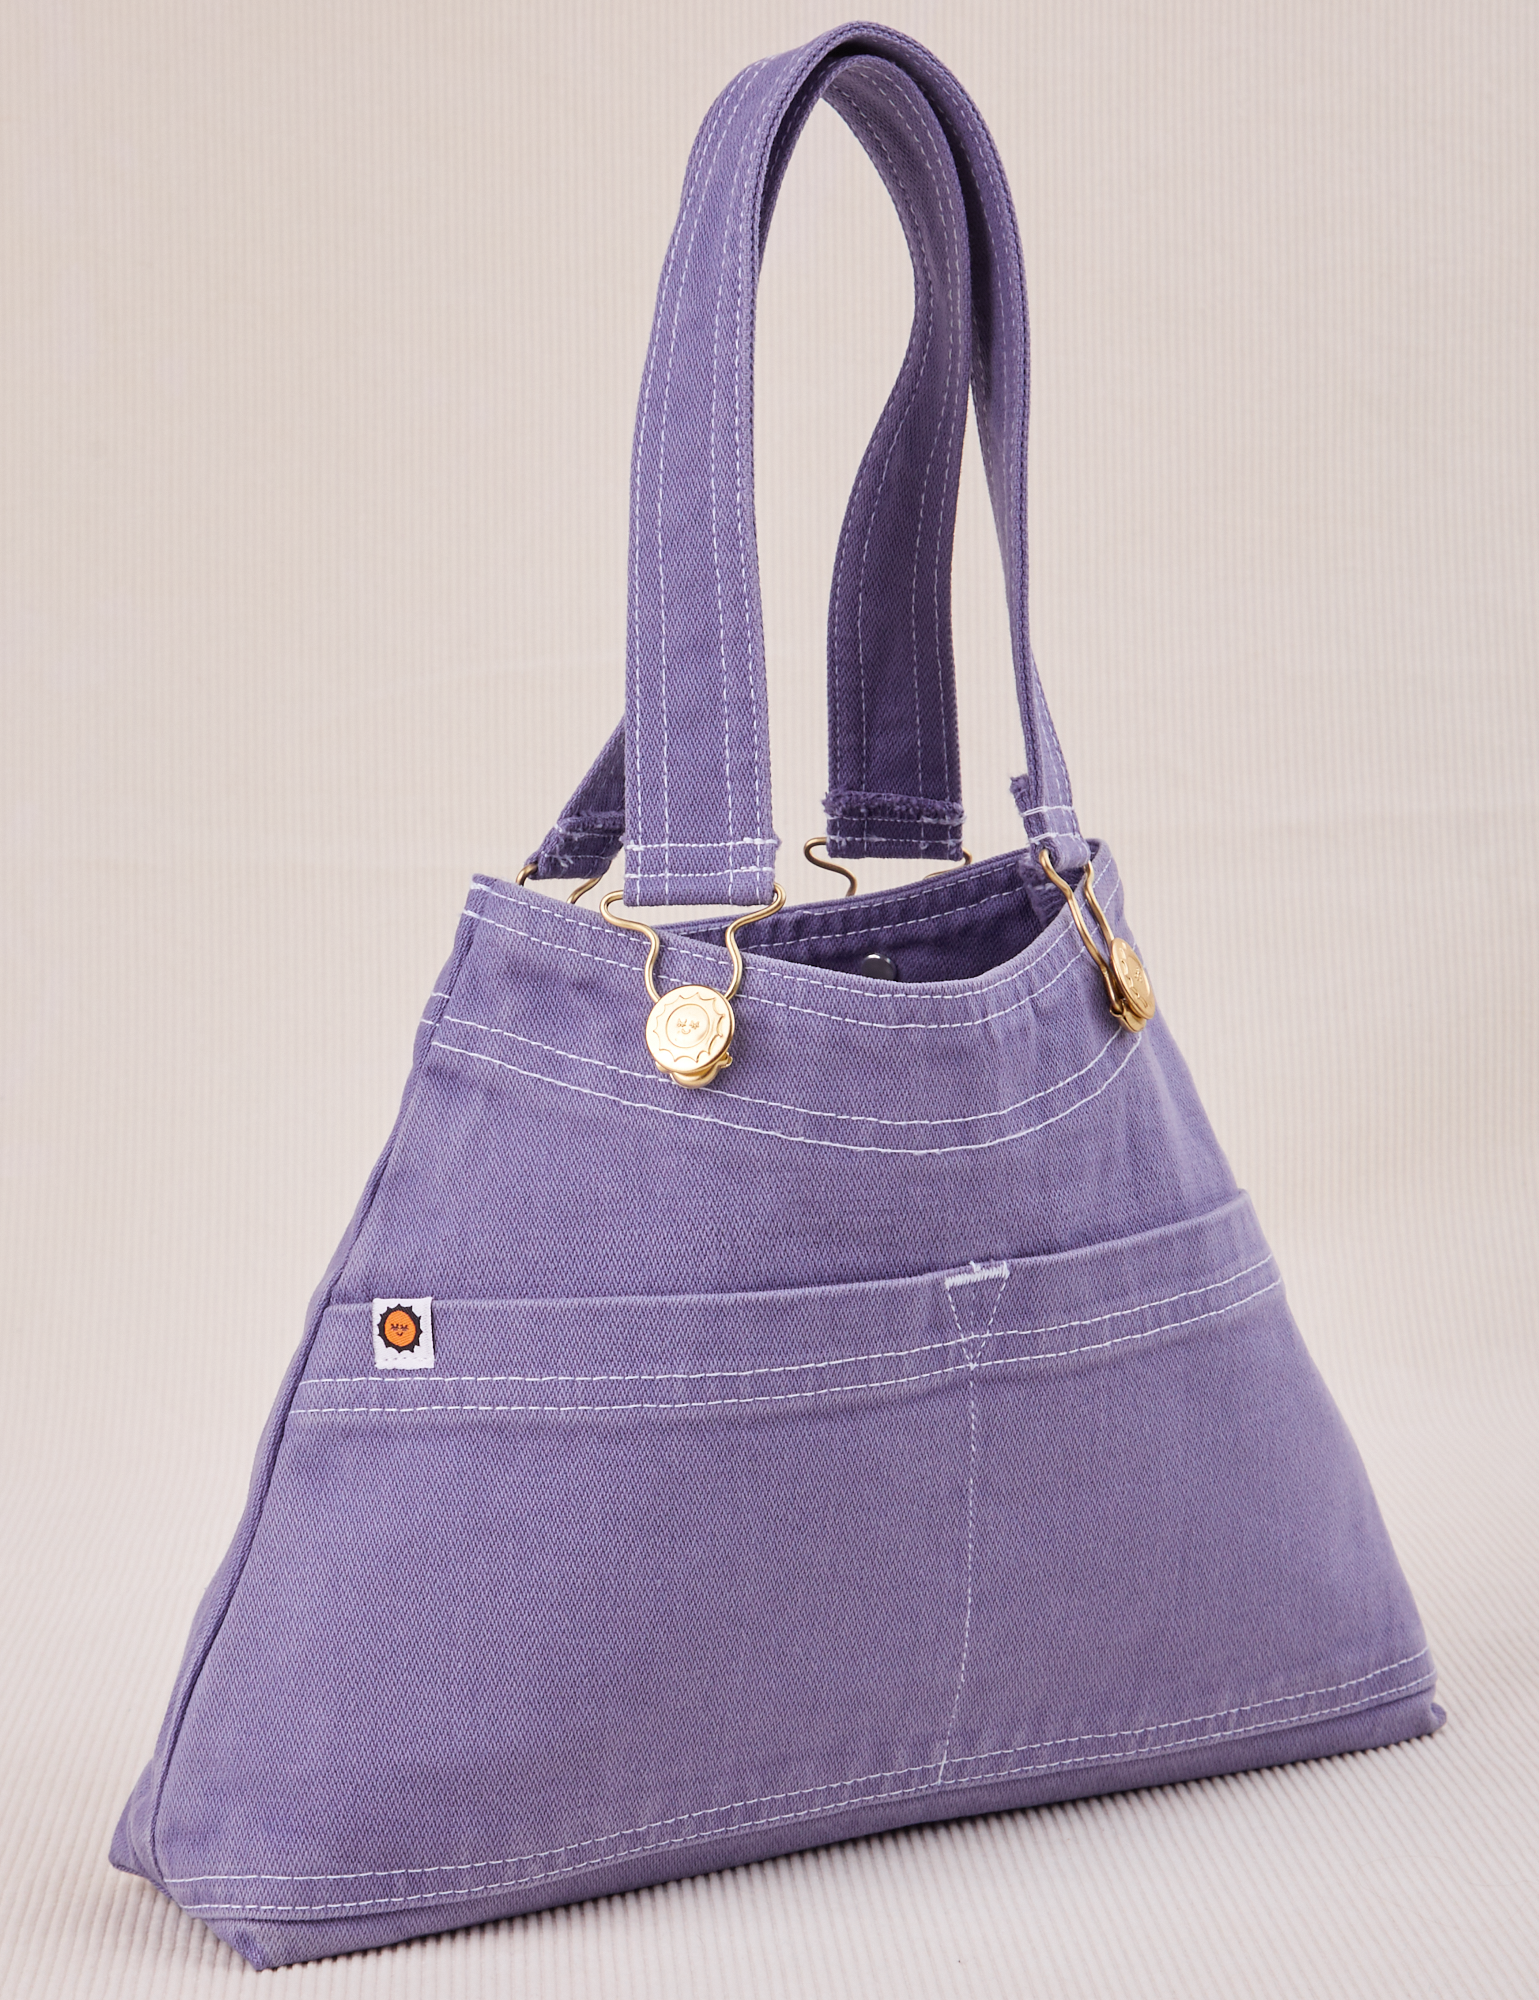 Overall Handbag in Faded Grape